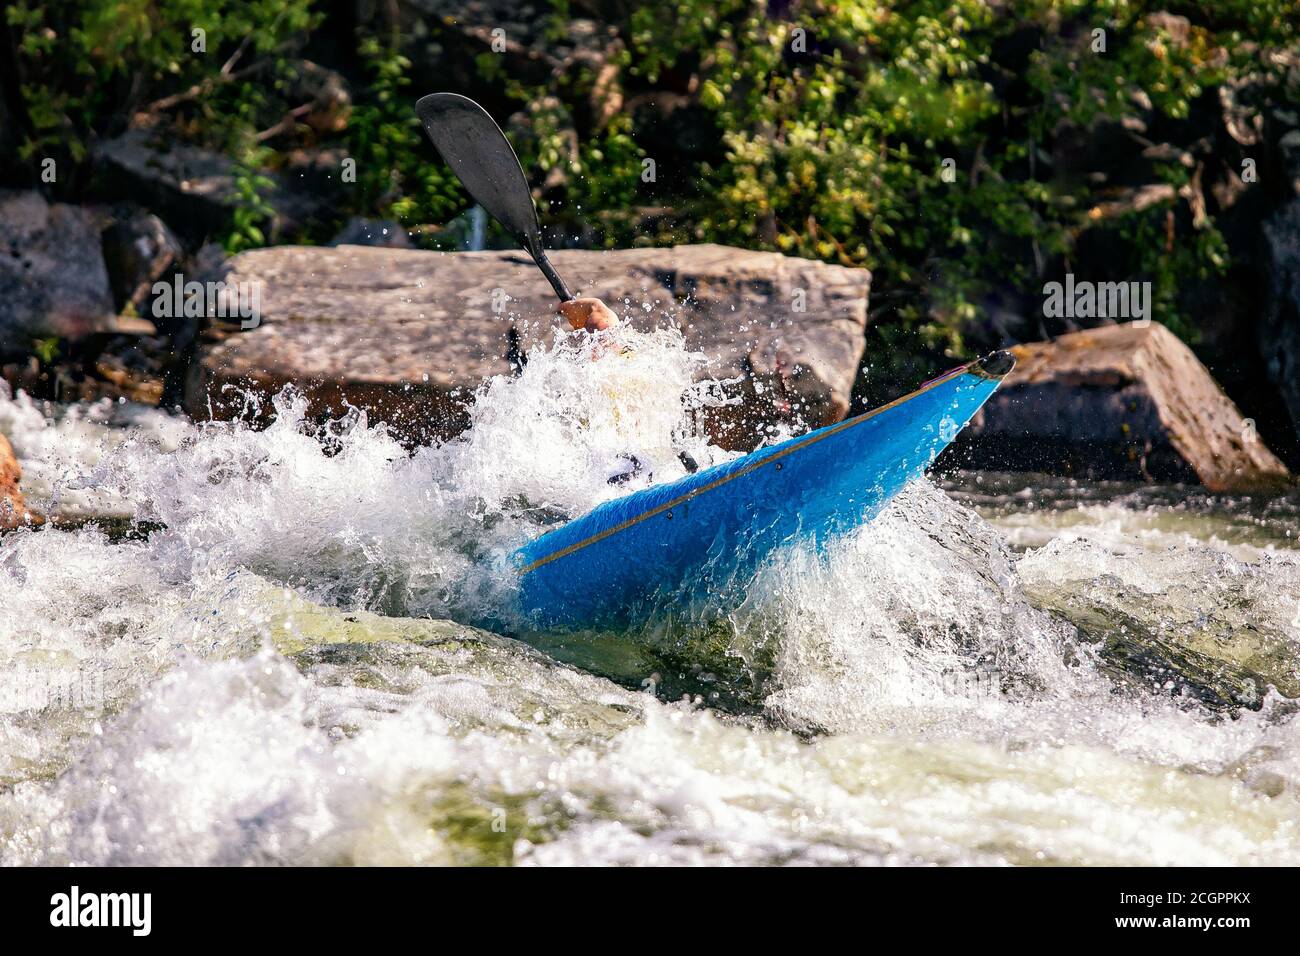 Extremsport Rafting Wildwasser Kajakfahren. Kerl im Kajak segelt Bergfluss  Stockfotografie - Alamy